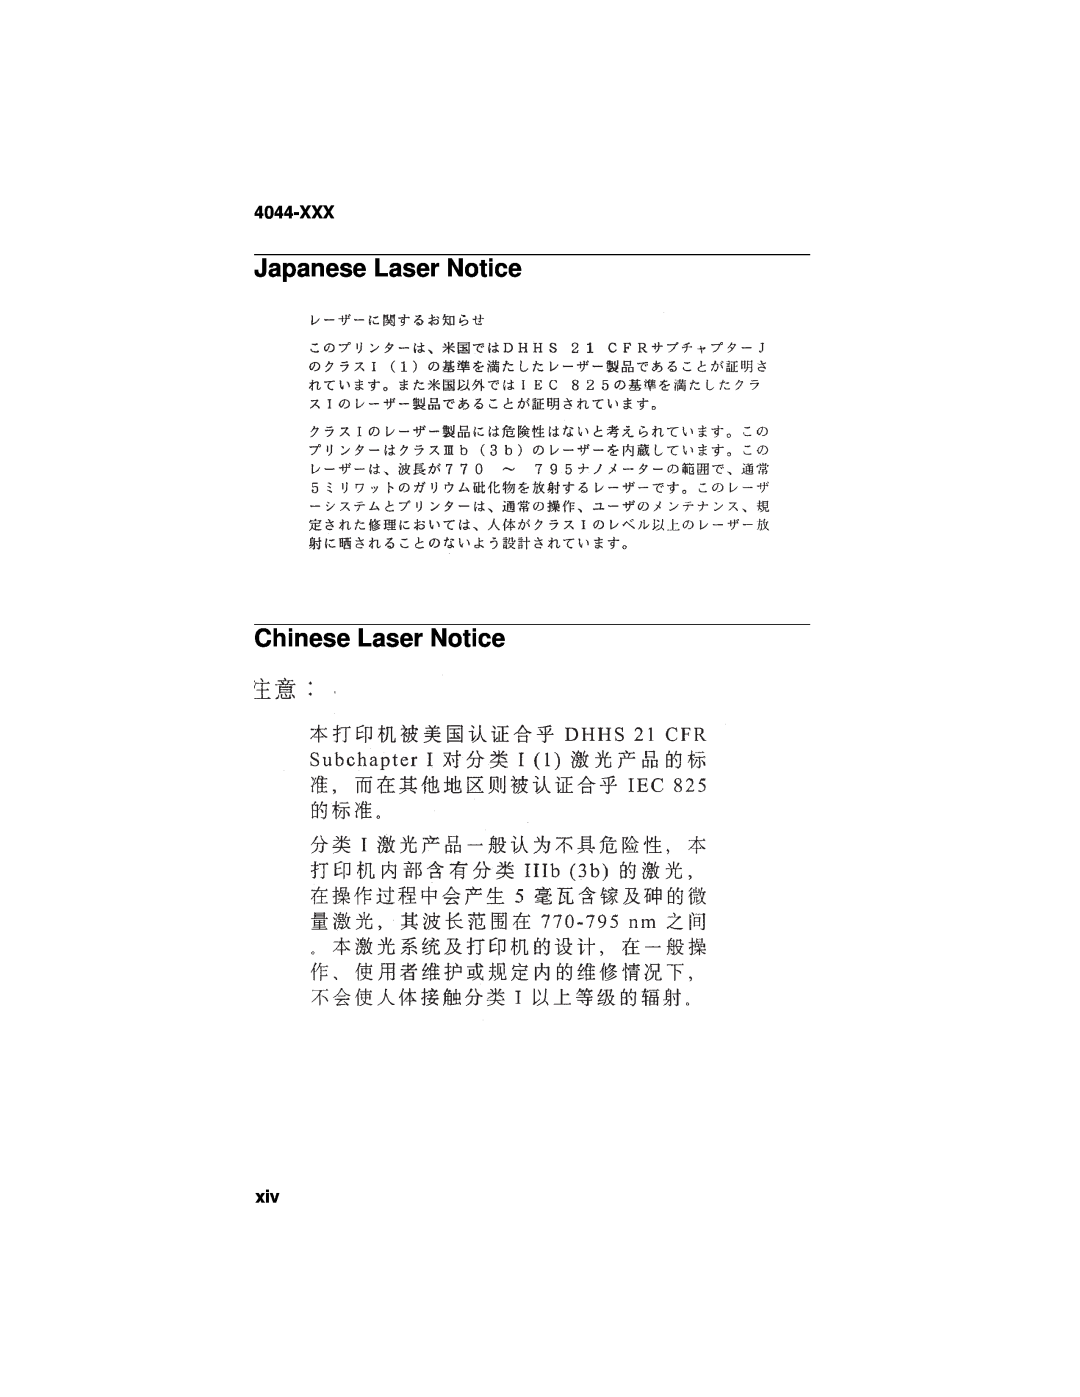 Lexmark 4044-XXX, E310 manual Japanese Laser Notice Chinese Laser Notice 